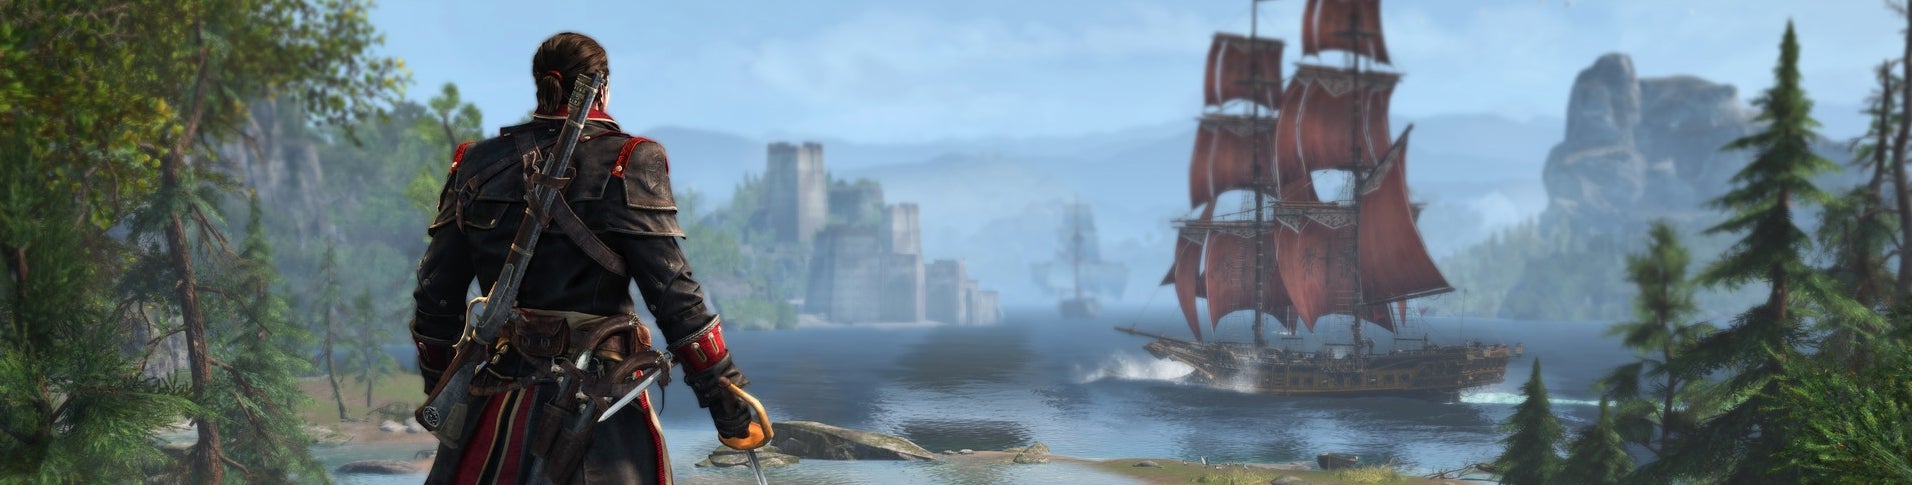 Imagem para Assassin's Creed Rogue Remastered - Análise